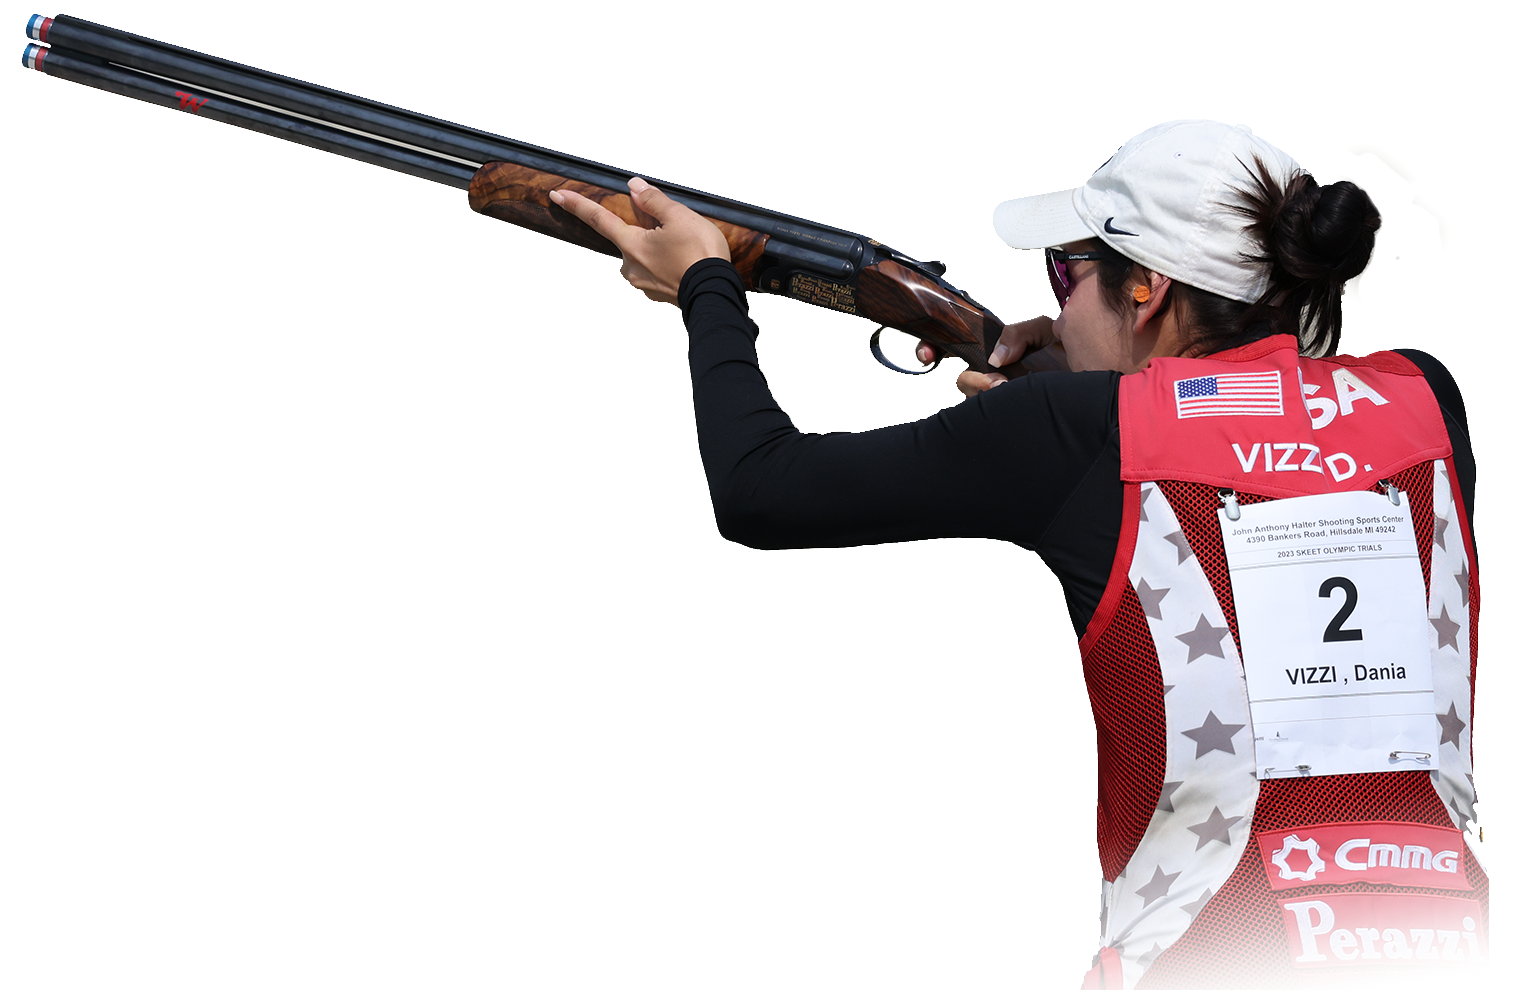 Female athlete wearing white ball cap and red vest aiming shotgun.